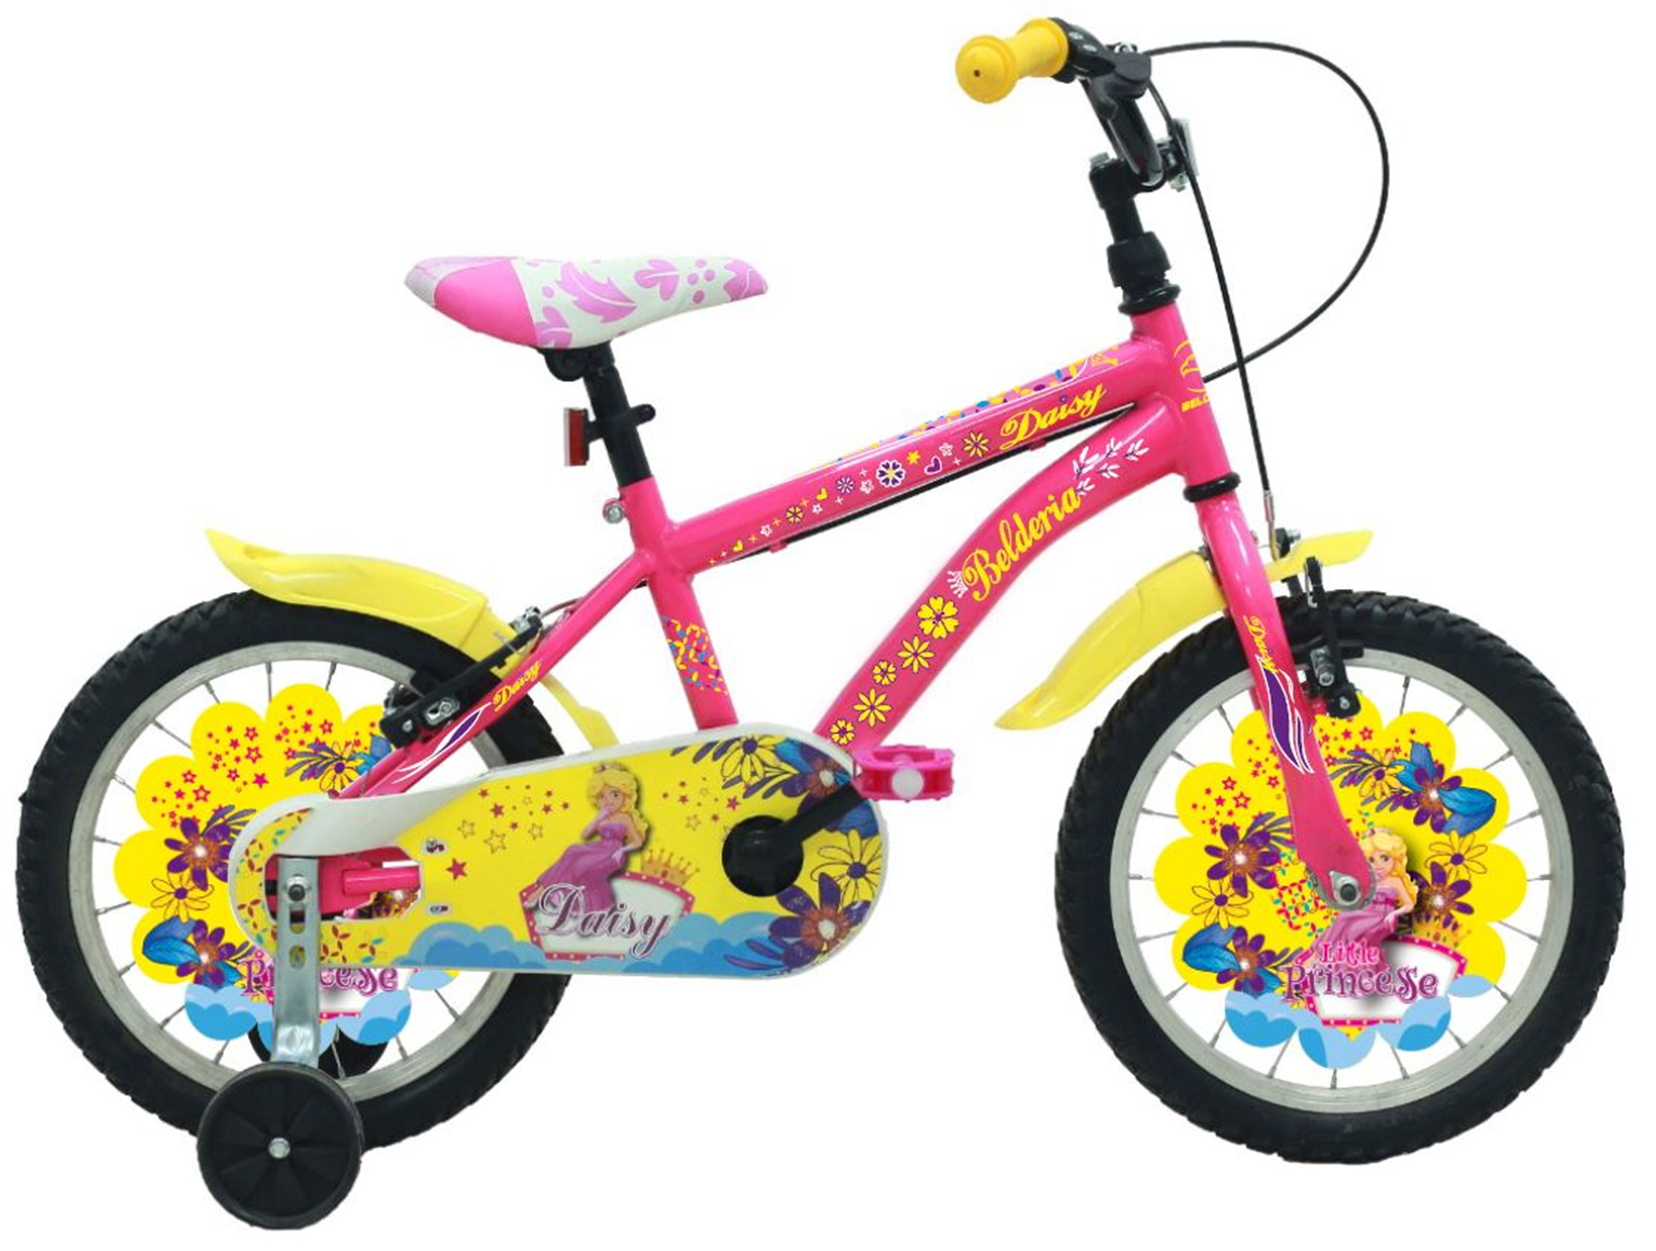 Bicicleta copii belderia daisy, culoare roz, roata 16